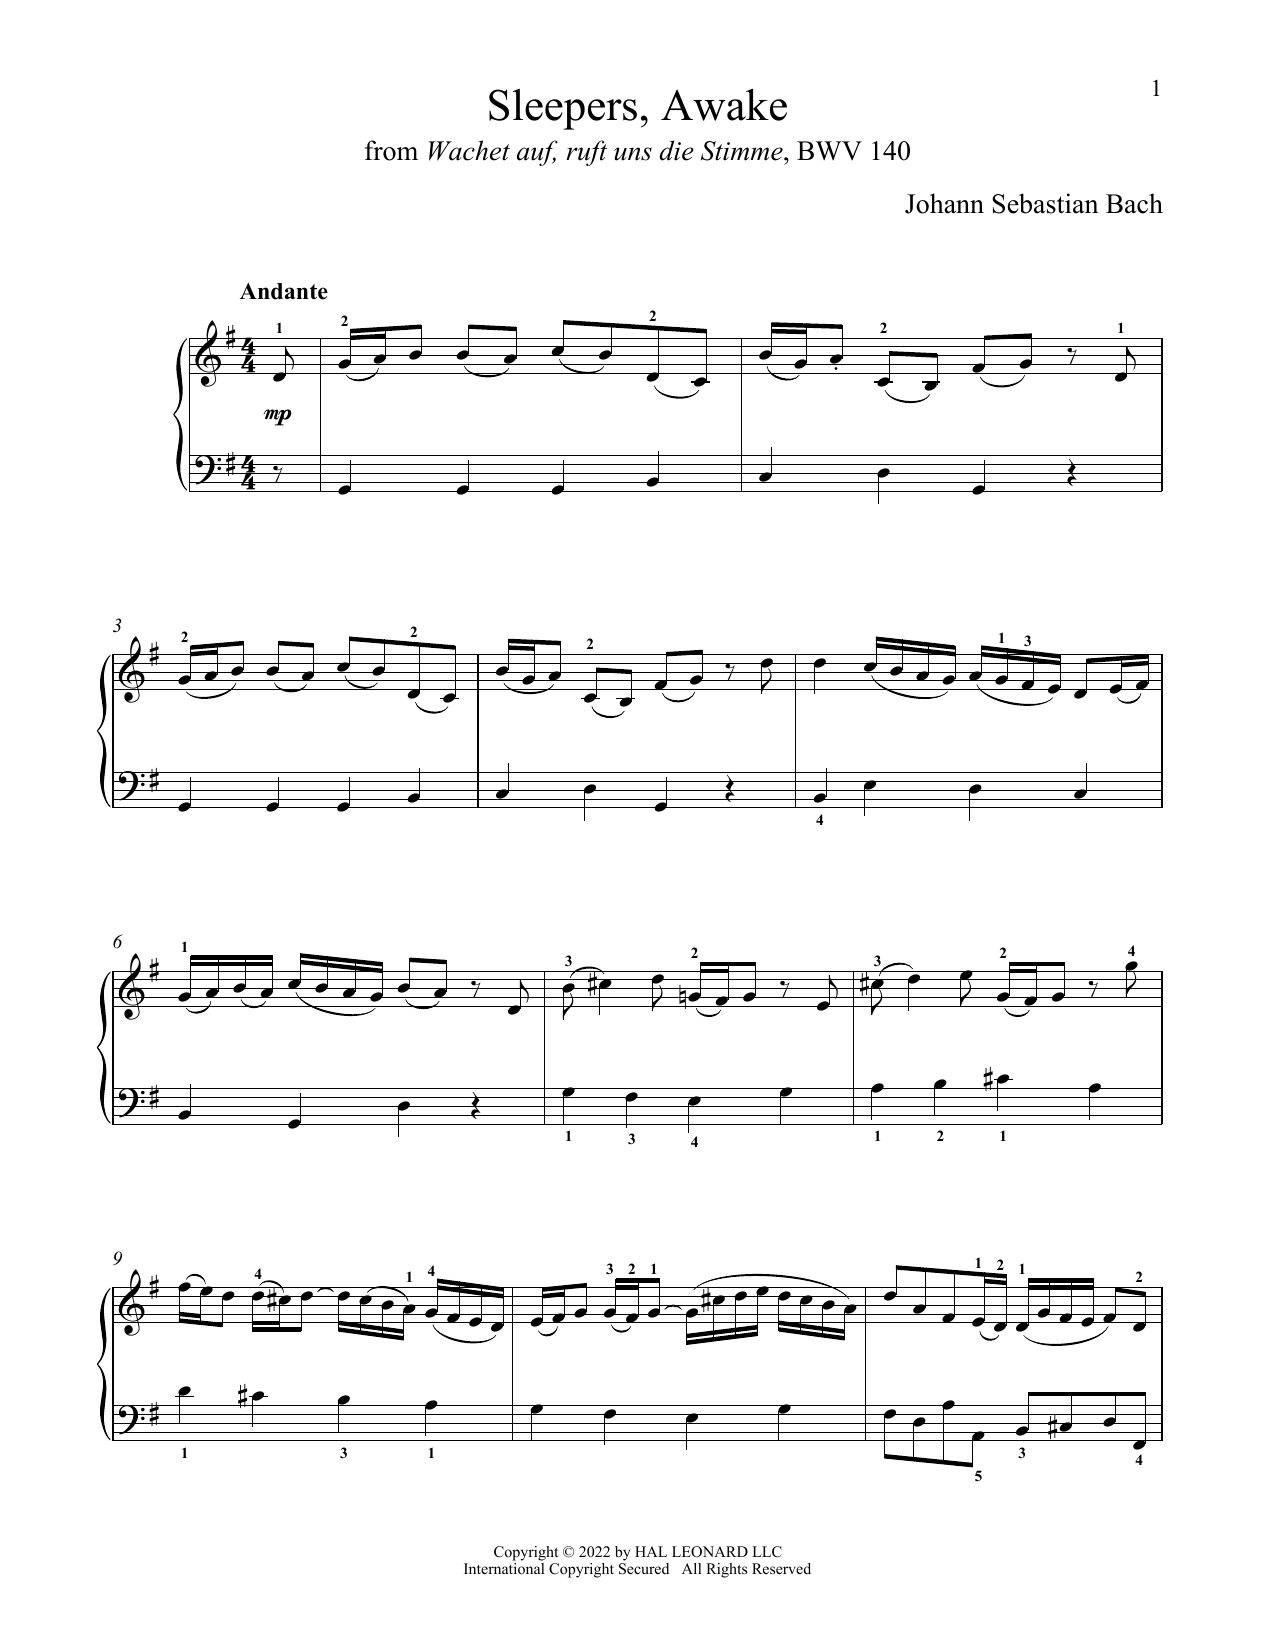 Johann Sebastian Bach Sleepers, Awake, BWV 140 (Wachet Auf) Sheet Music Notes & Chords for Piano Solo - Download or Print PDF